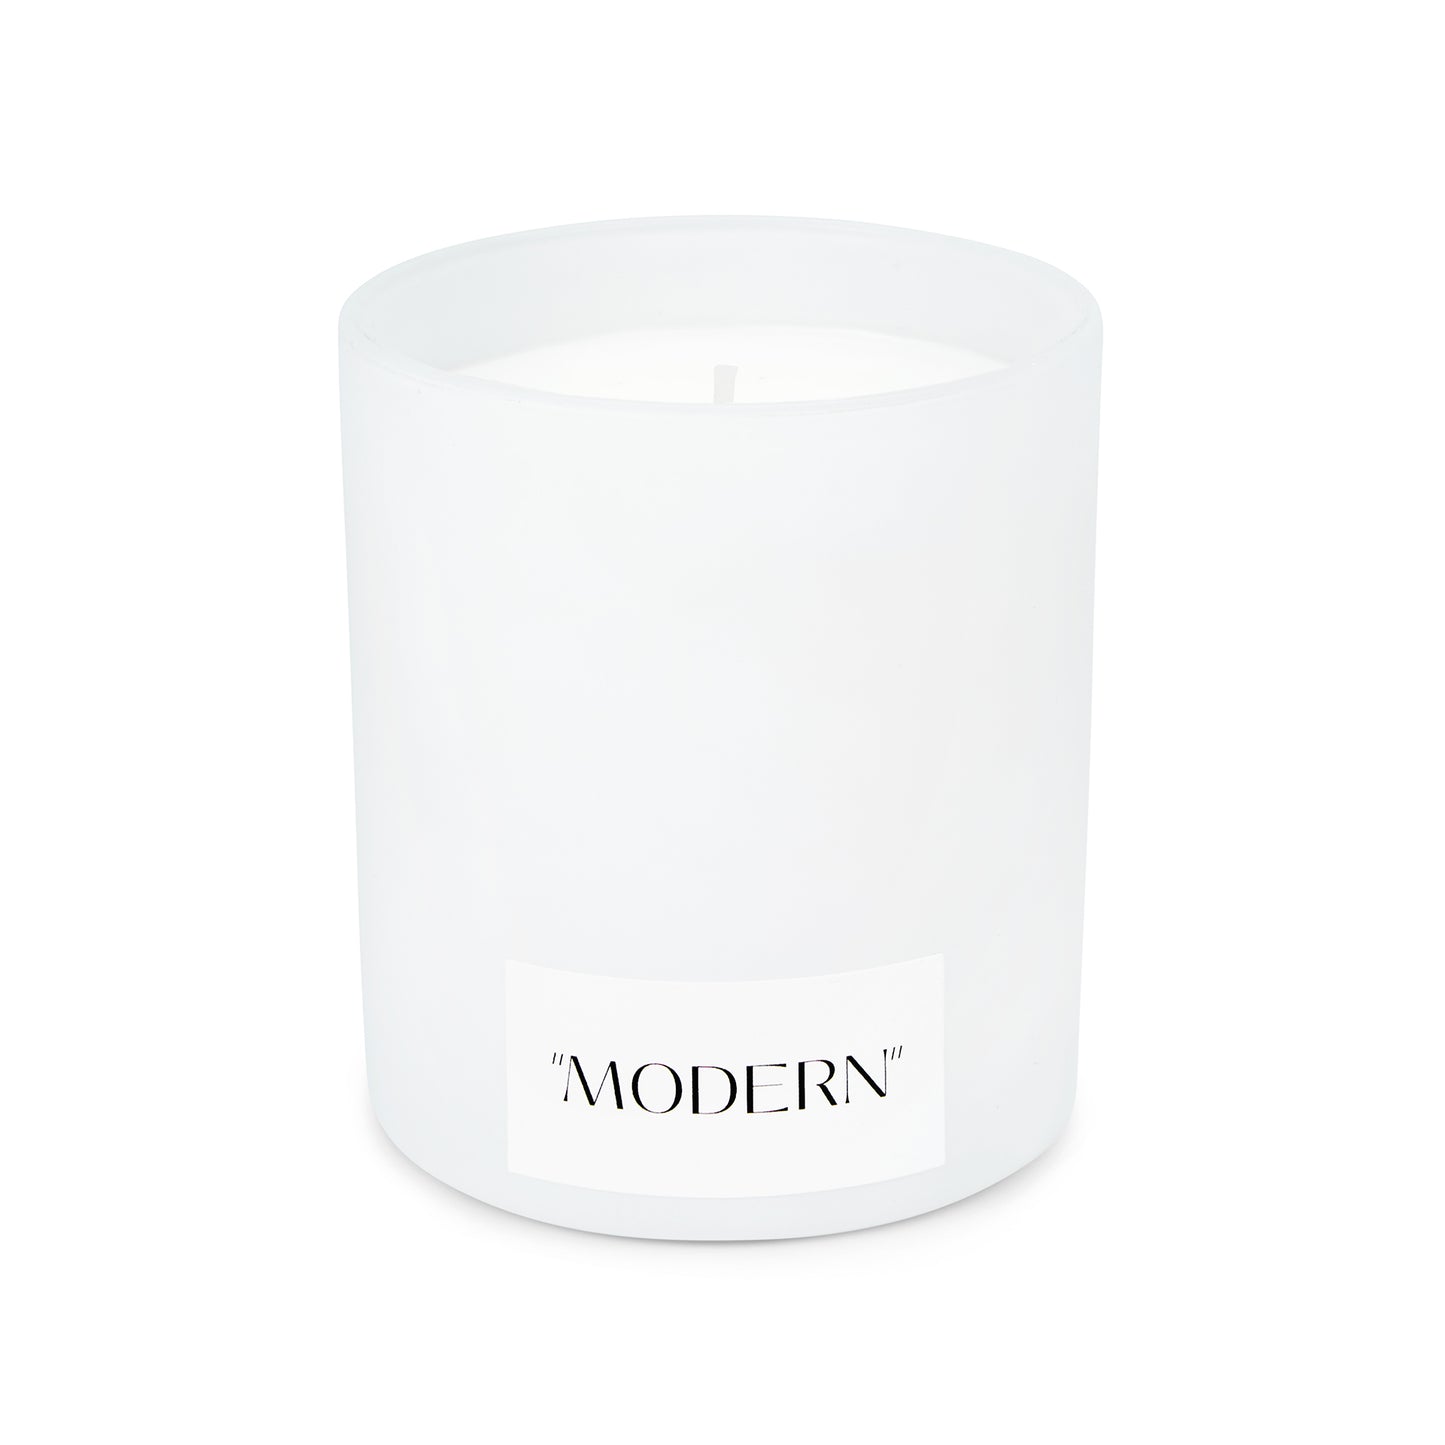 "MODERN" candle